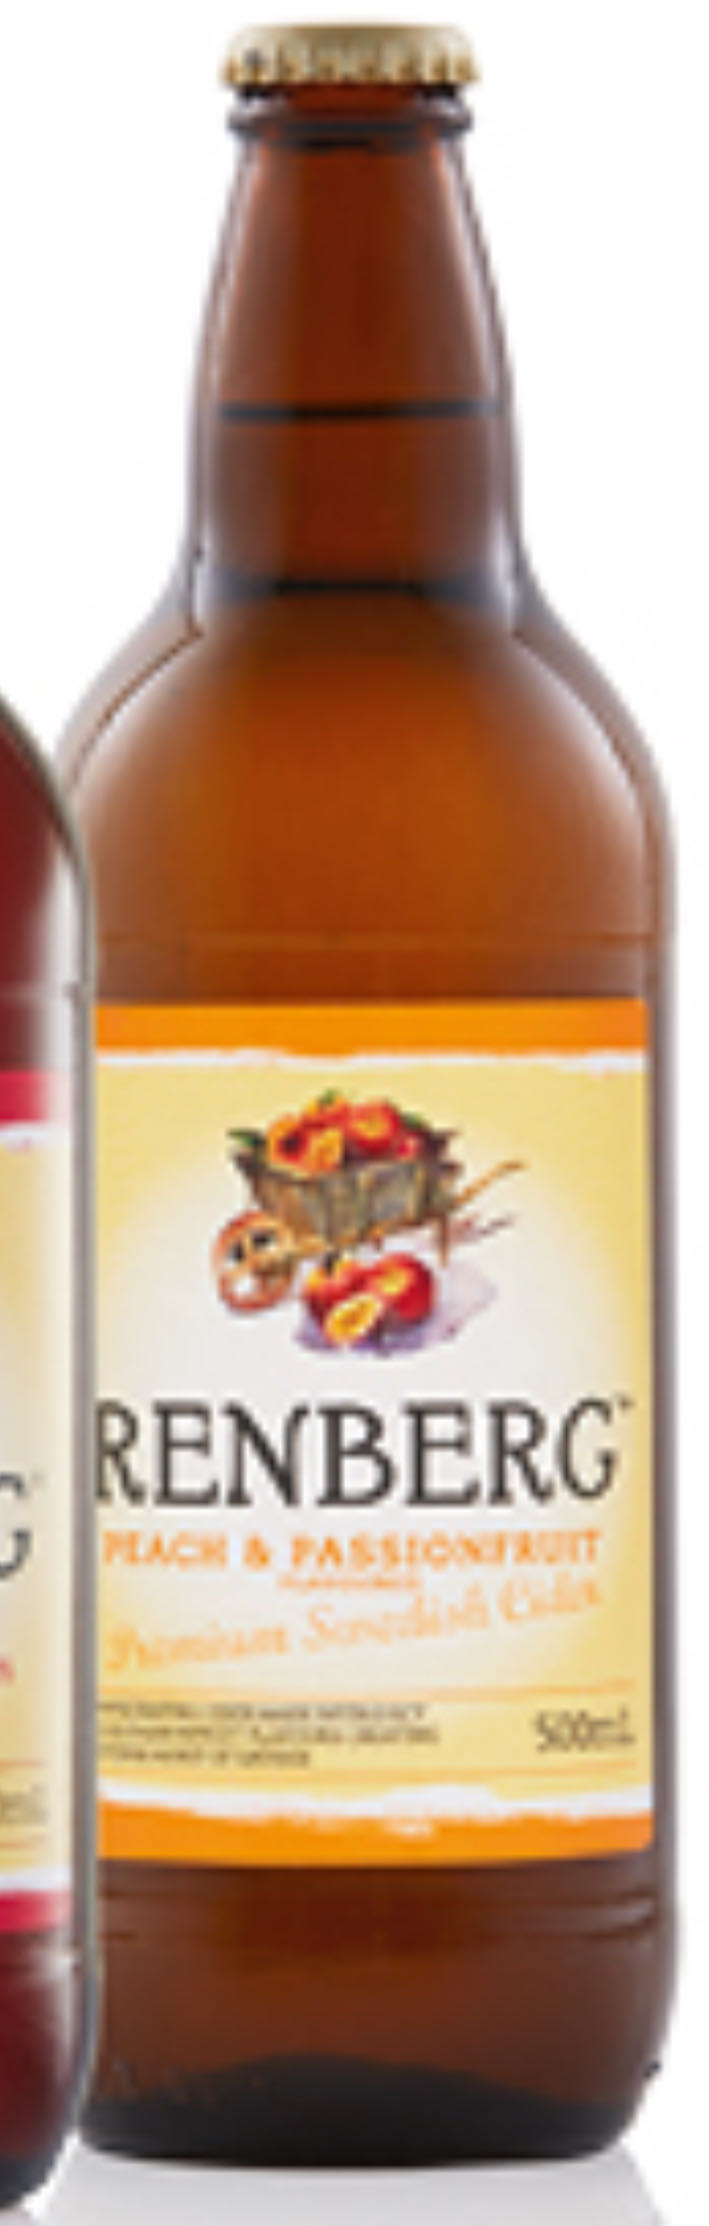 Renberg Peach & Passionfruit Premium Swedish Cider 500ml  (500 mL) alcohol collectible - Main Image 1